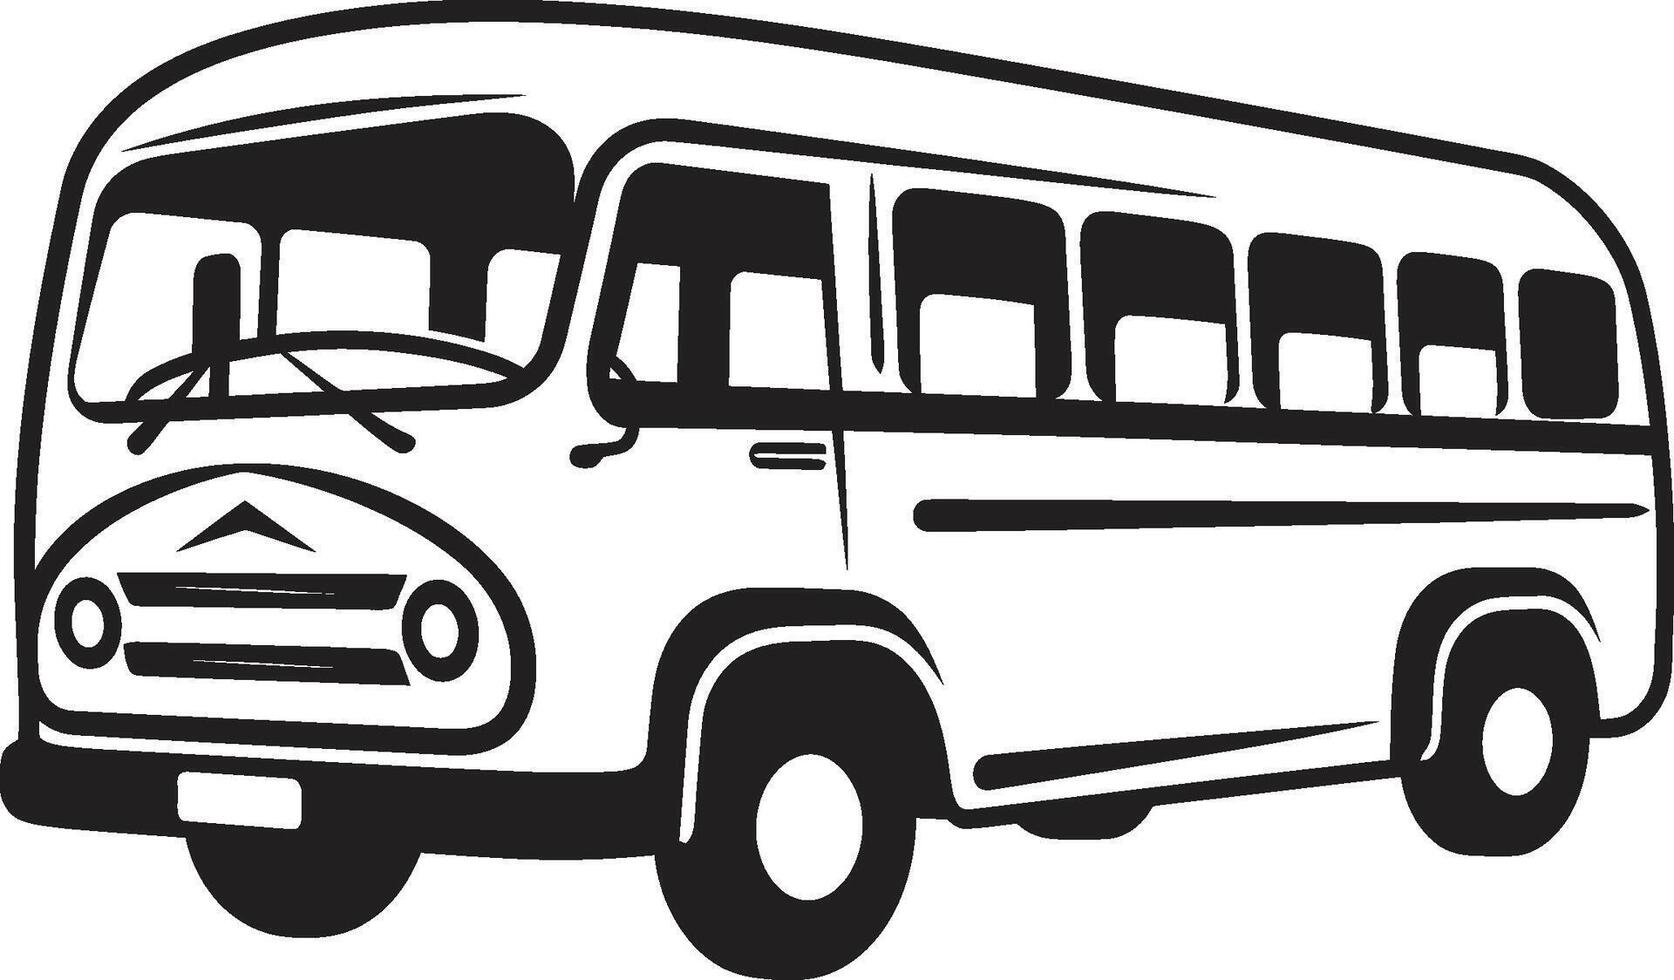 Retro Bus Radiance Monochrome Icon Iconic Transit Black Vector Emblem